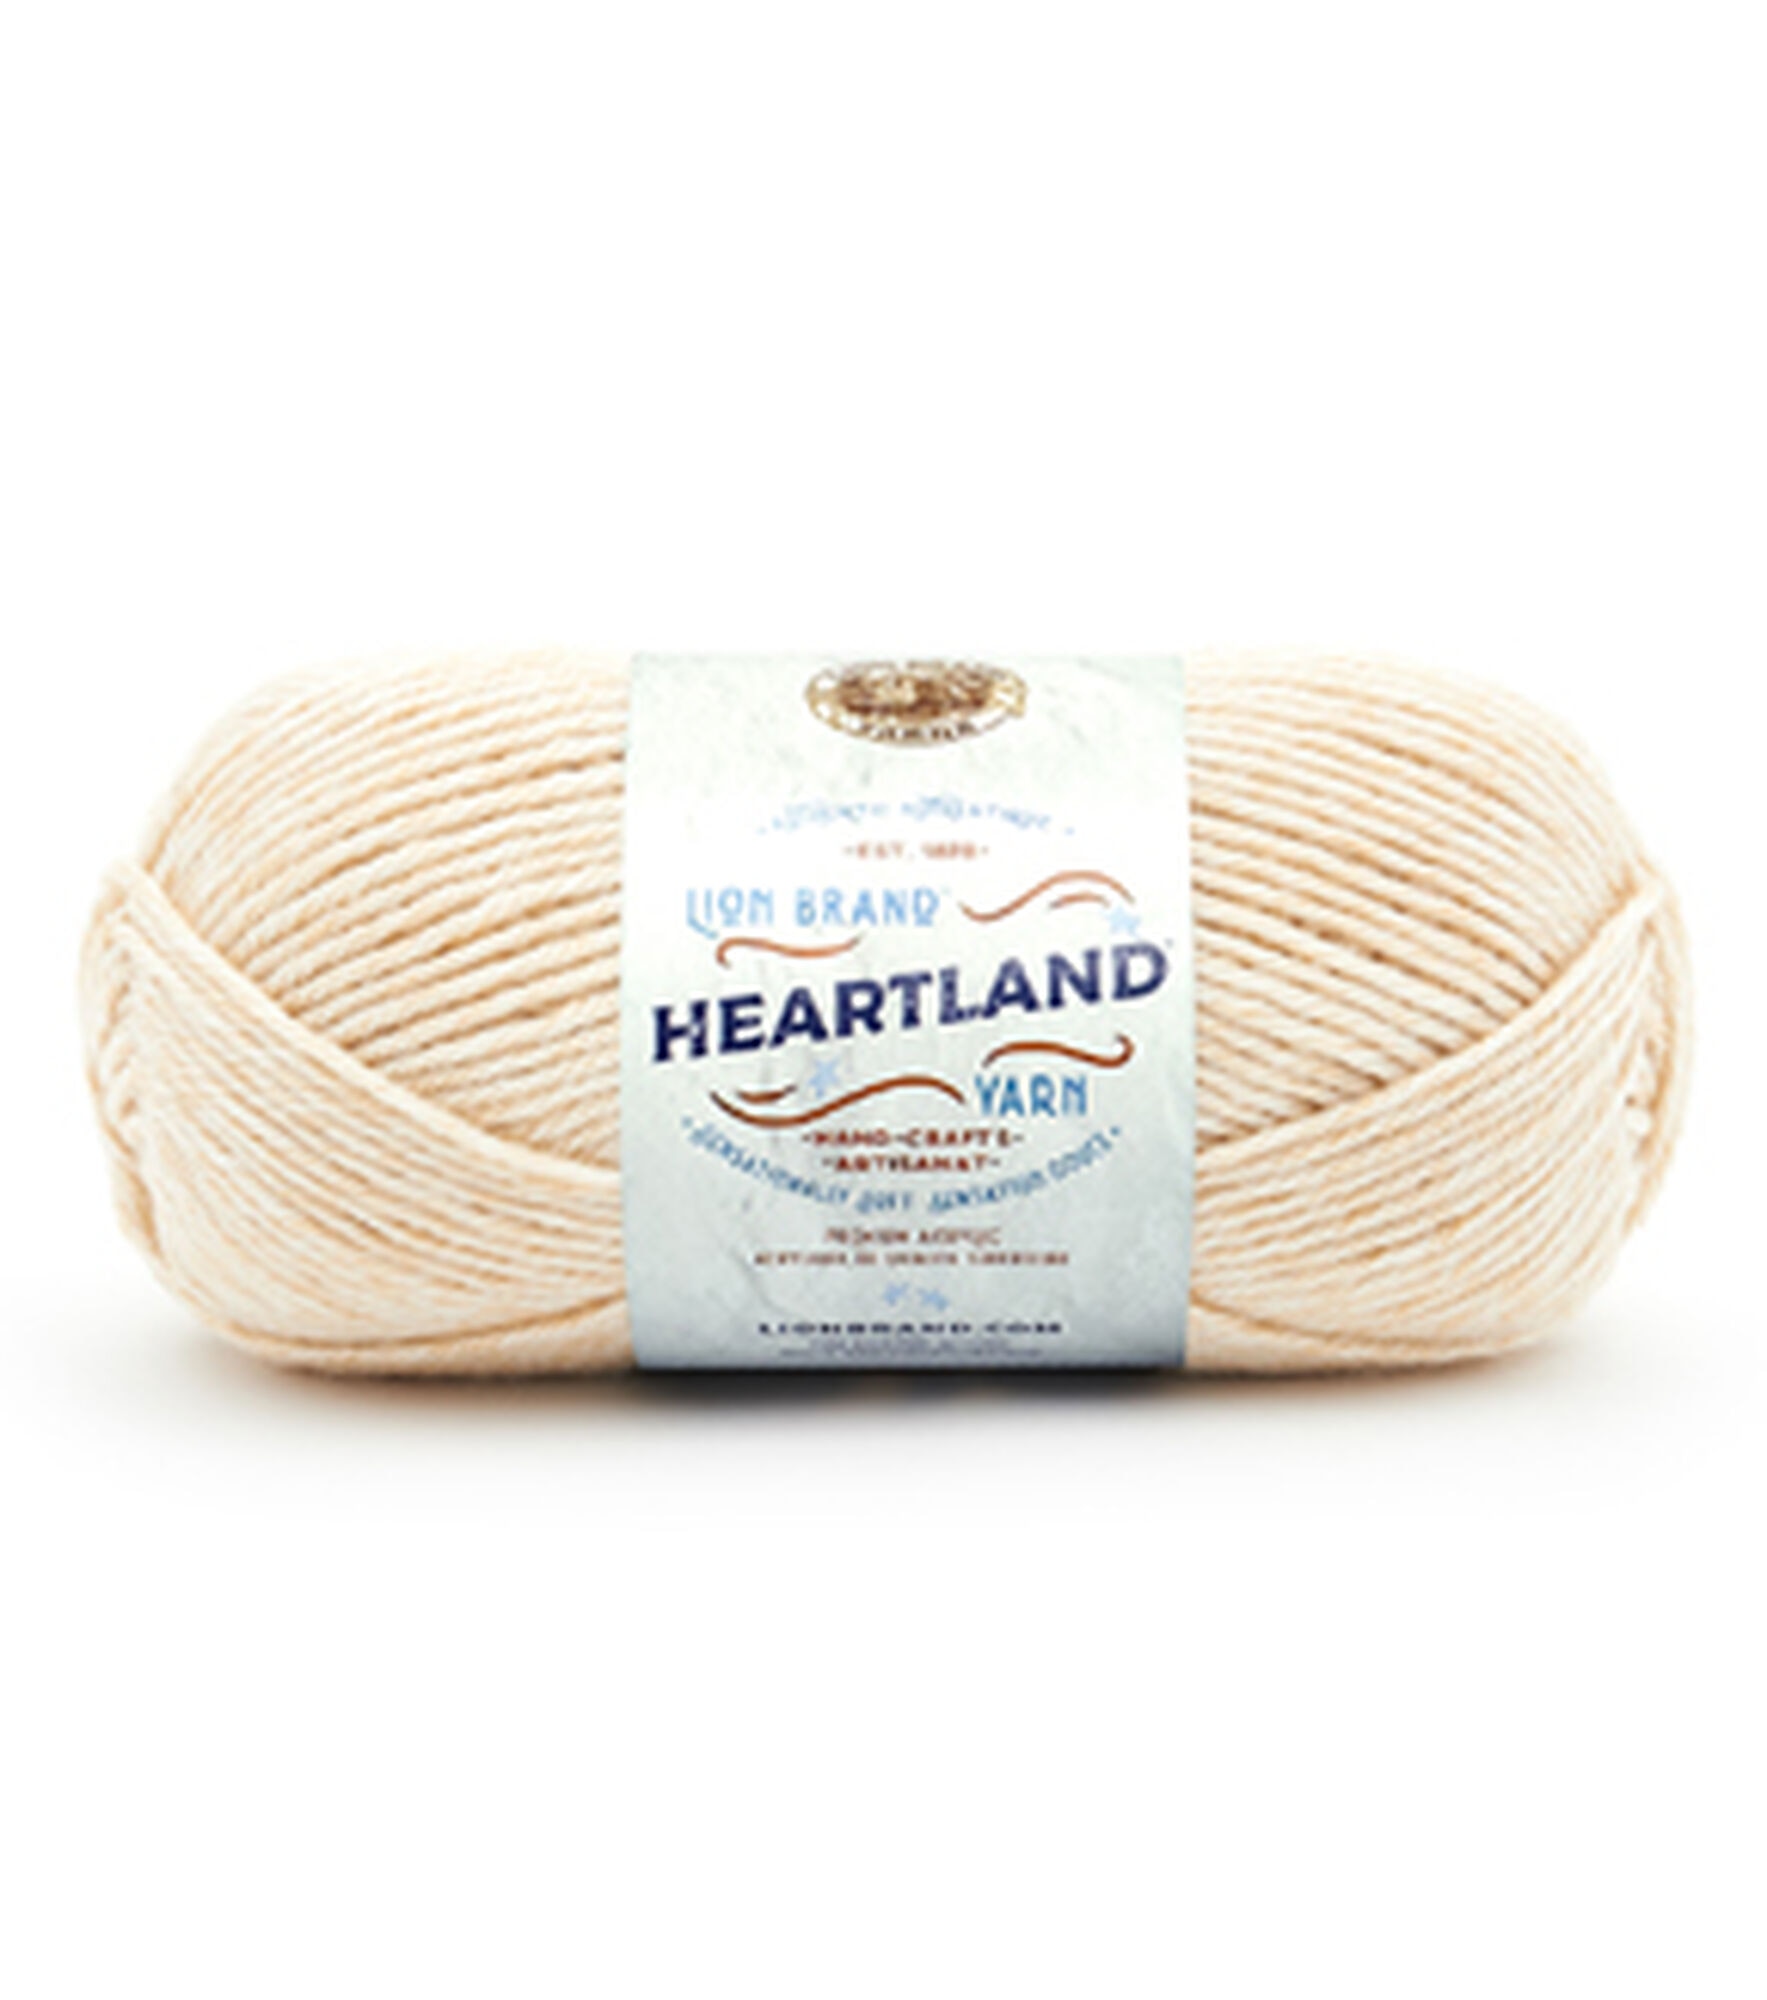 Heartland® Thick & Quick® Yarn - Discontinued – Lion Brand Yarn